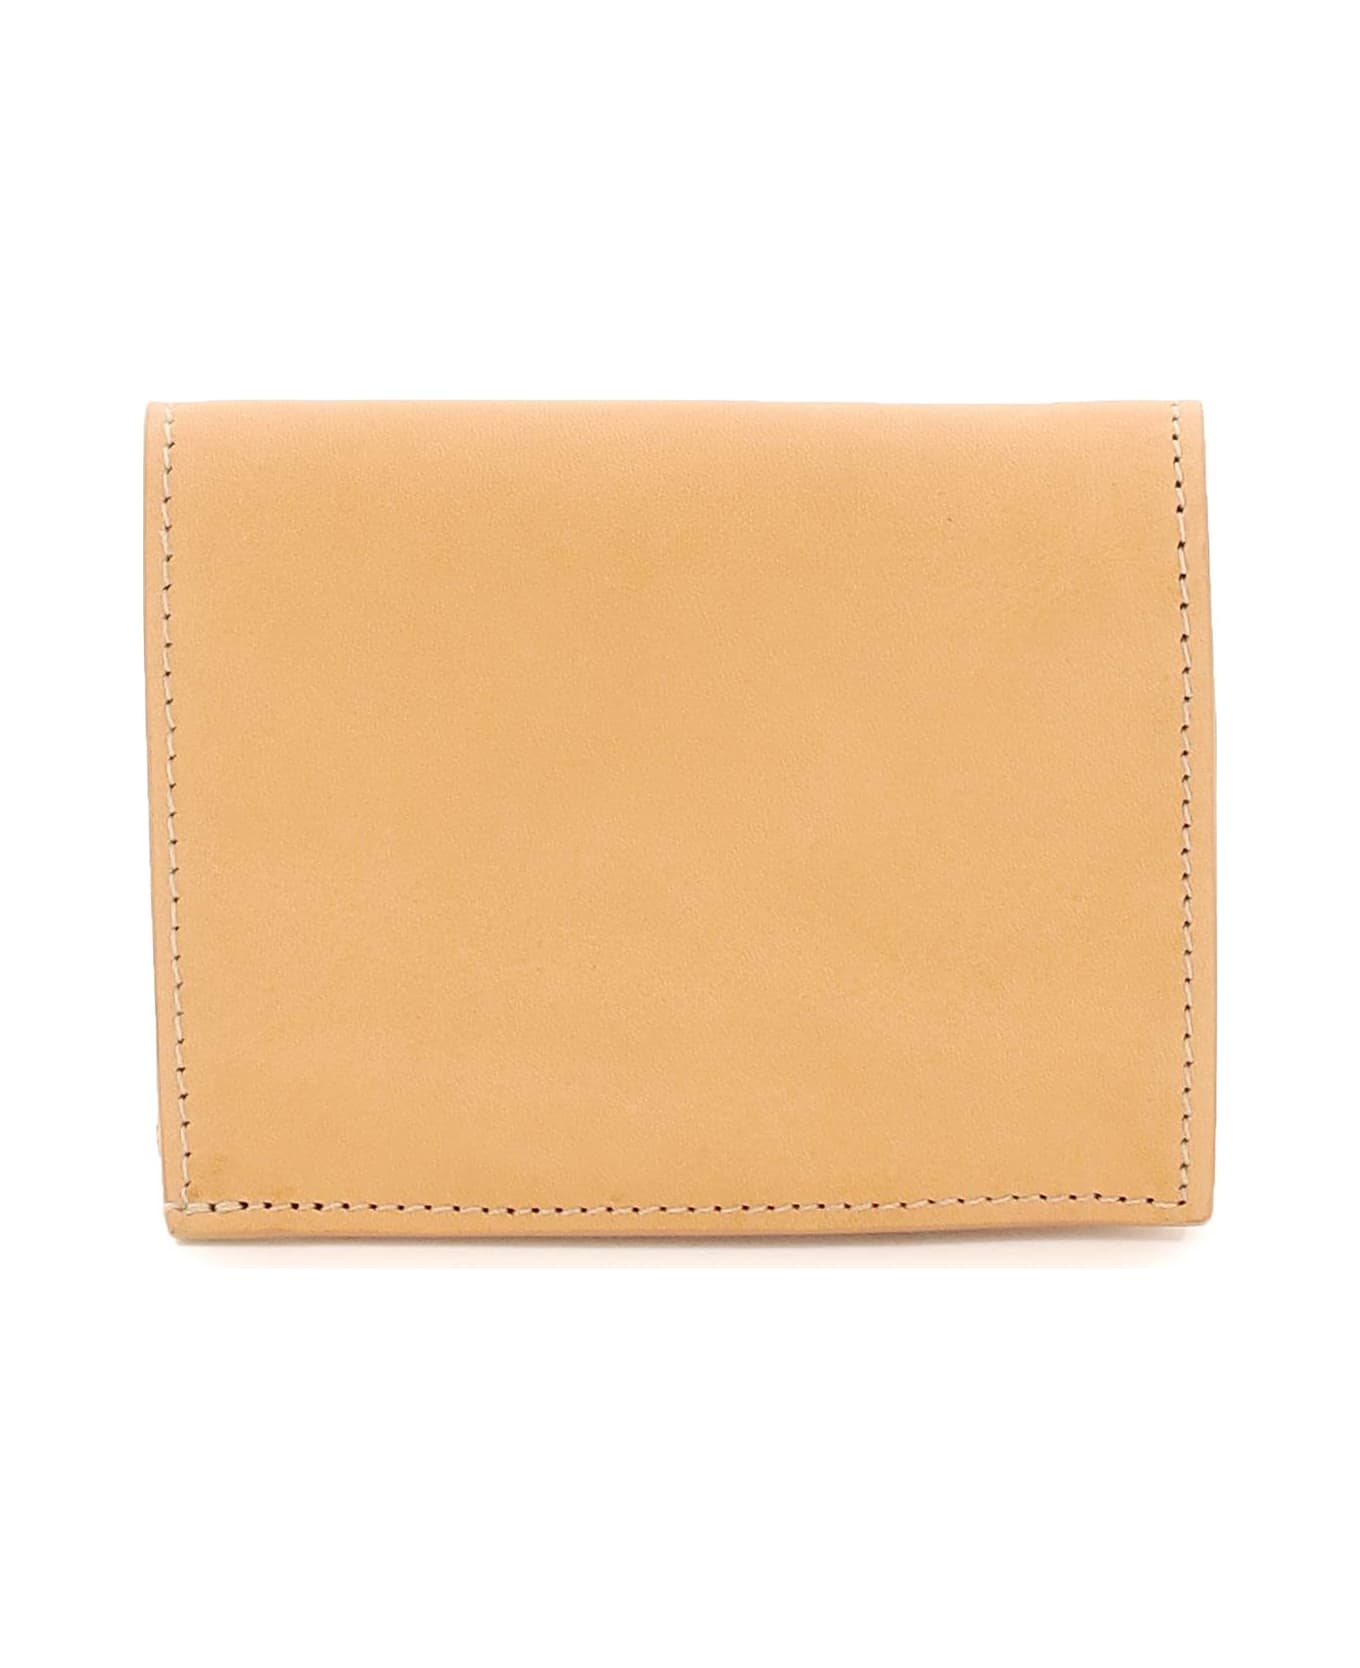 Il Bisonte Leather Wallet - NATURALE (Beige)